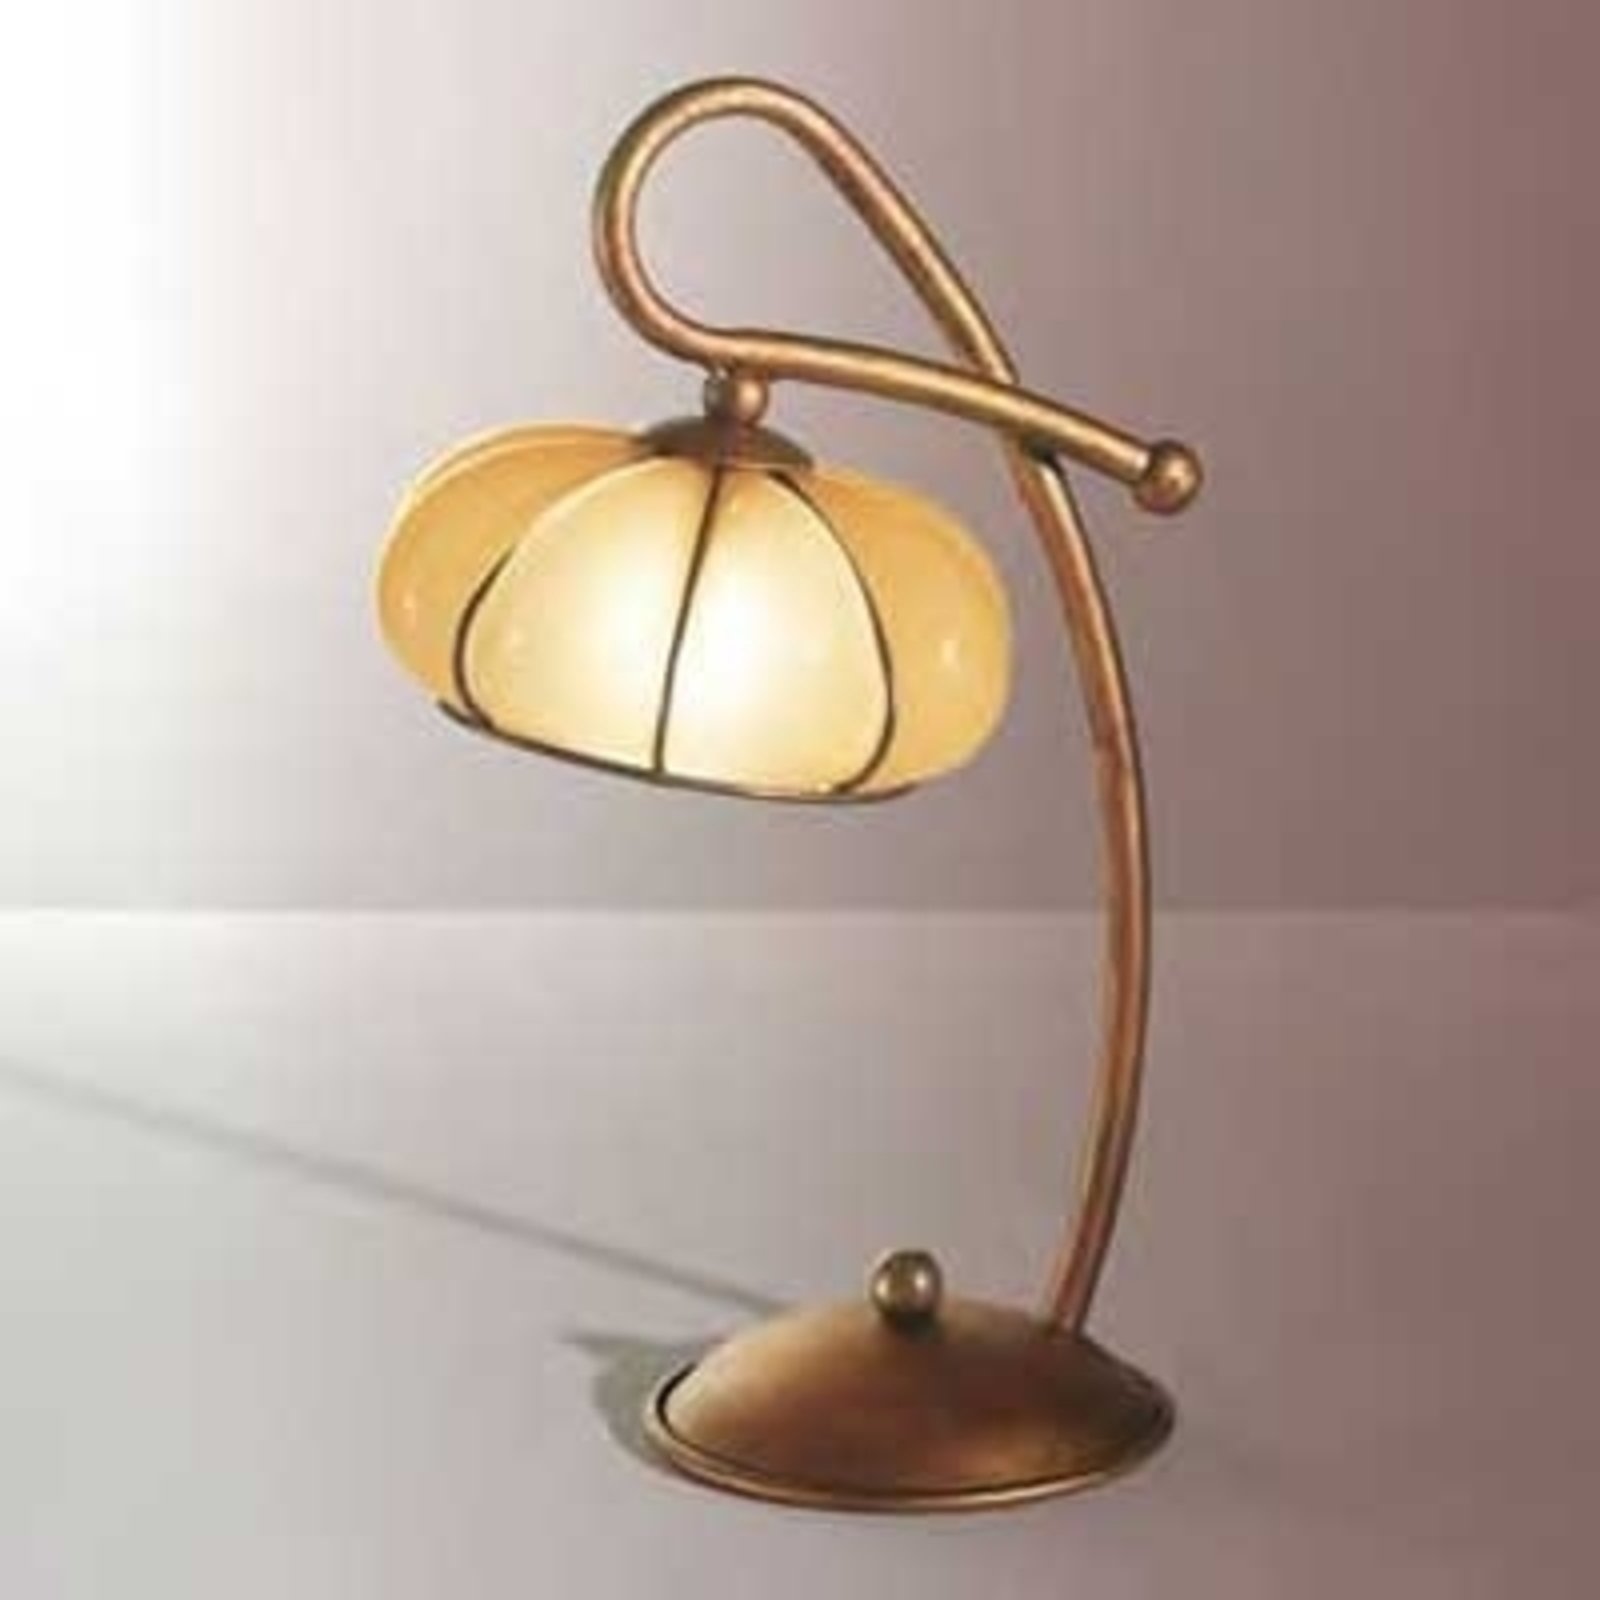 Classic LOTO table lamp, handmade